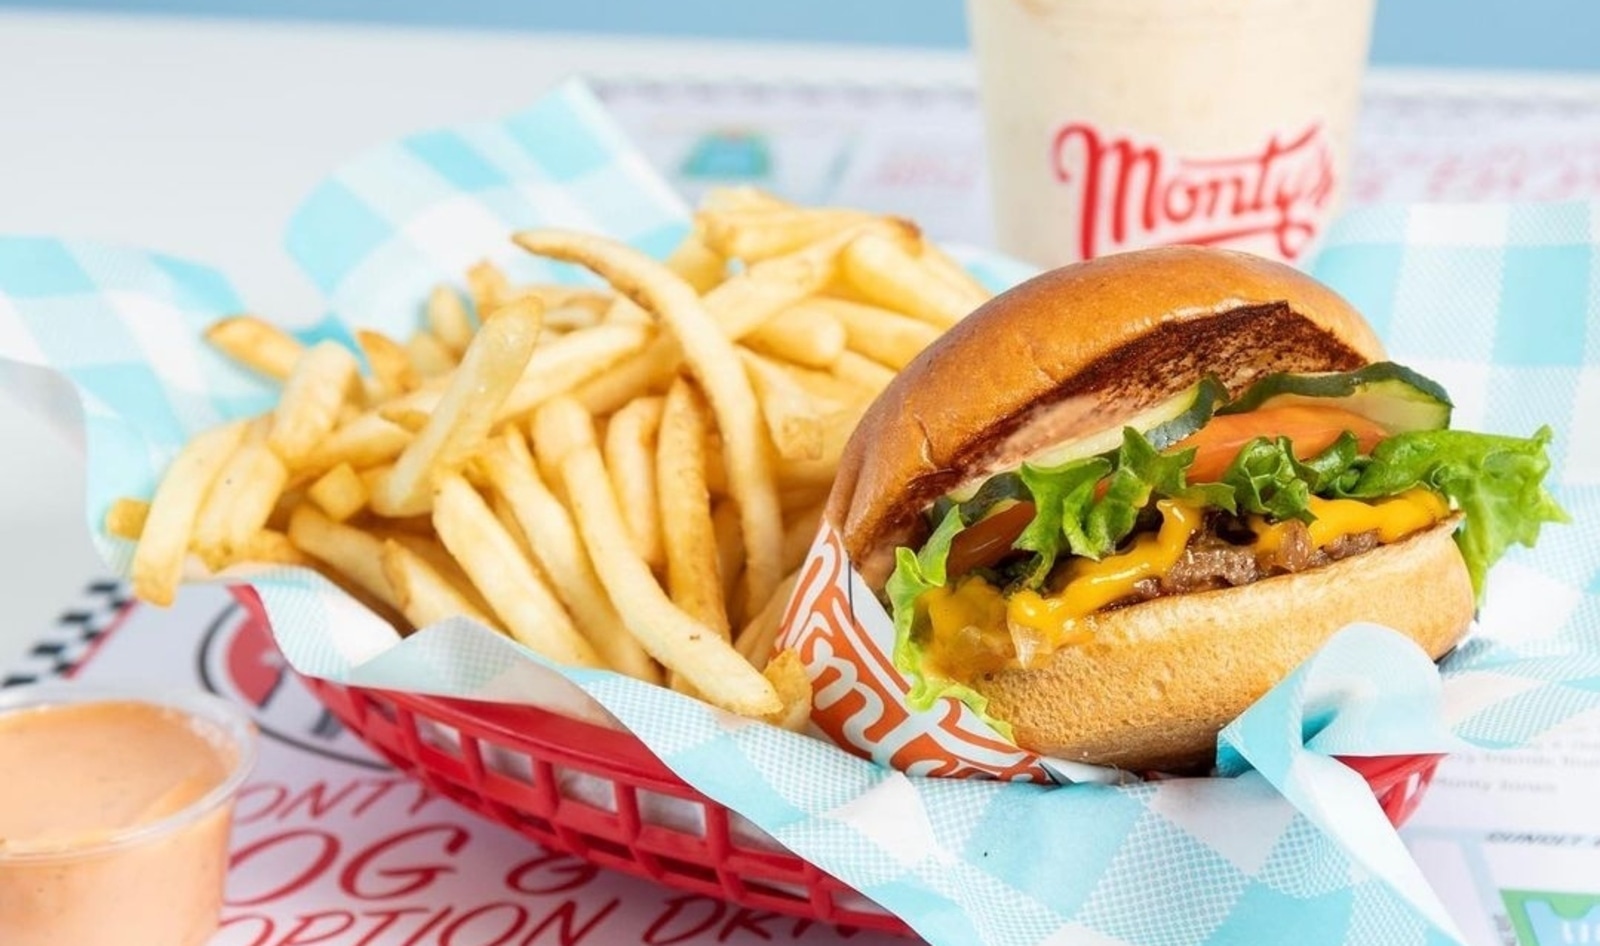 16 Juicy Vegan Burgers That Are Way Better Than the Big Mac&nbsp;